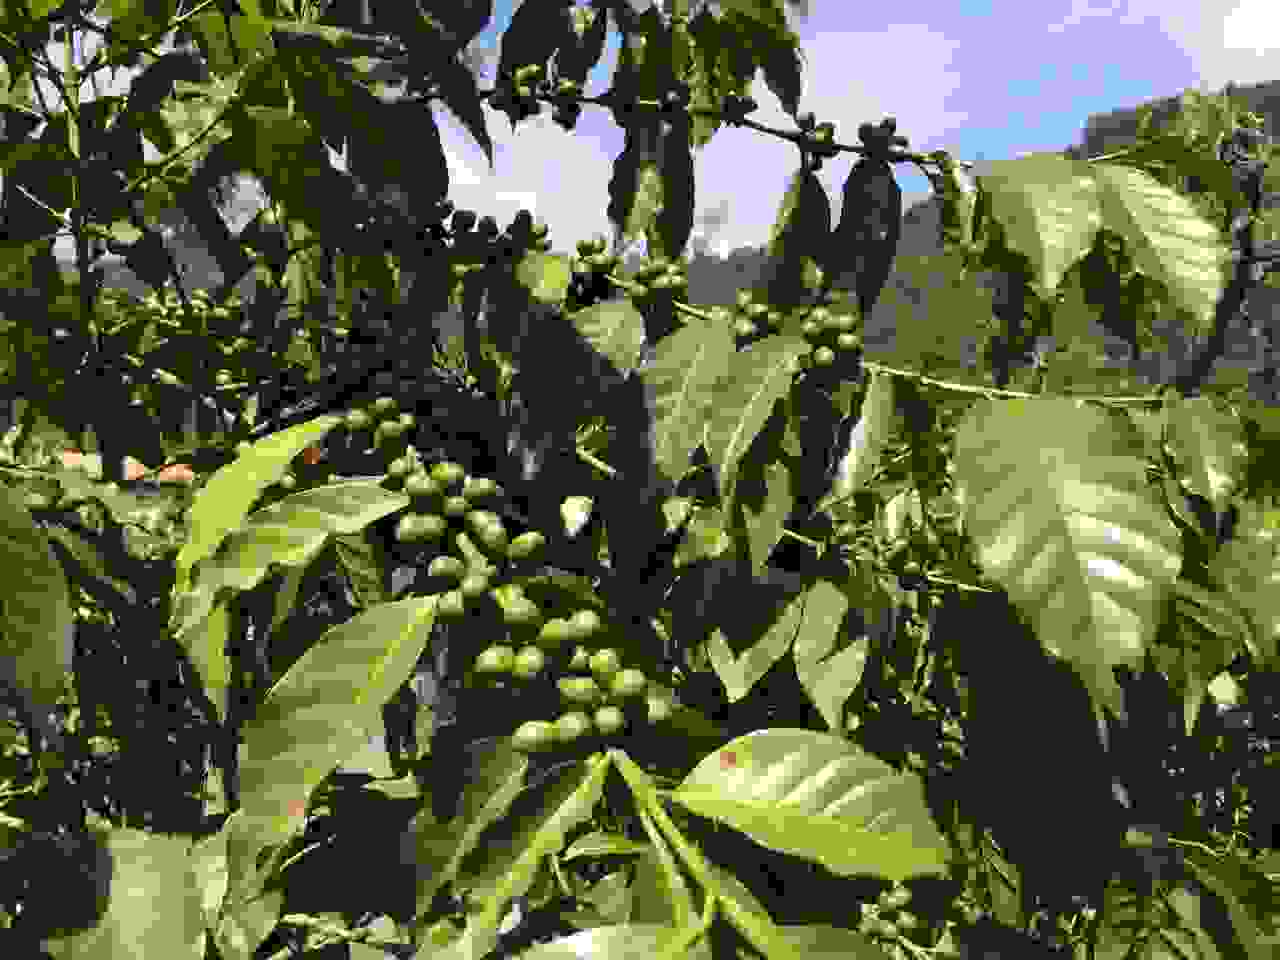 Coffee plant